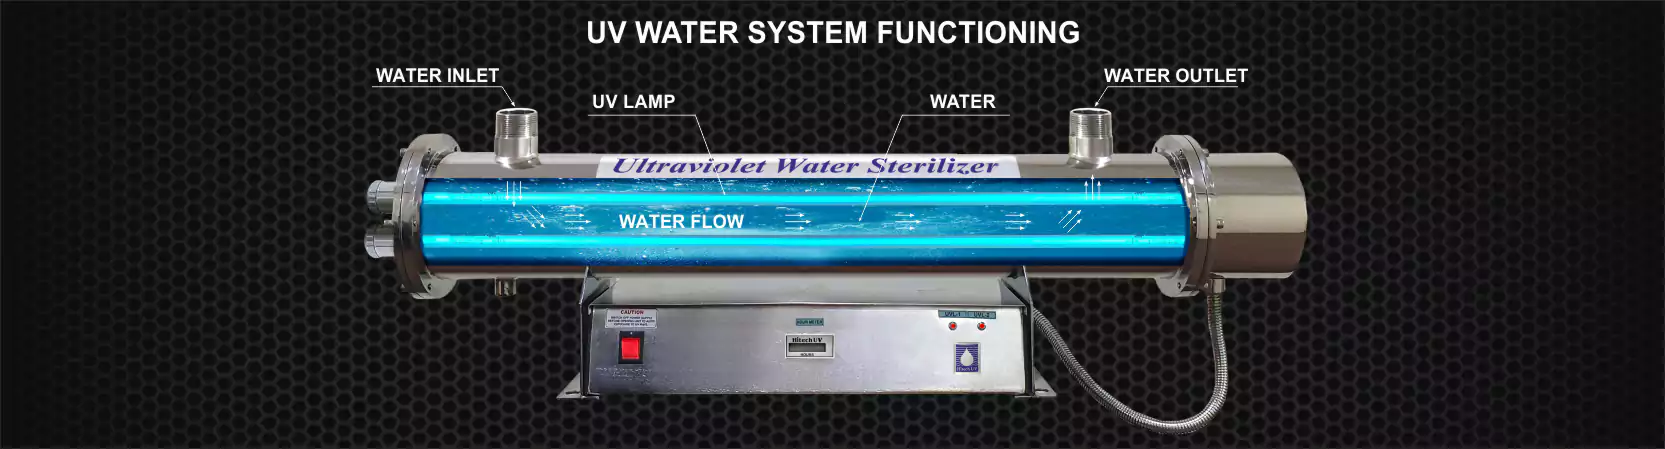 UV Water System Functioning